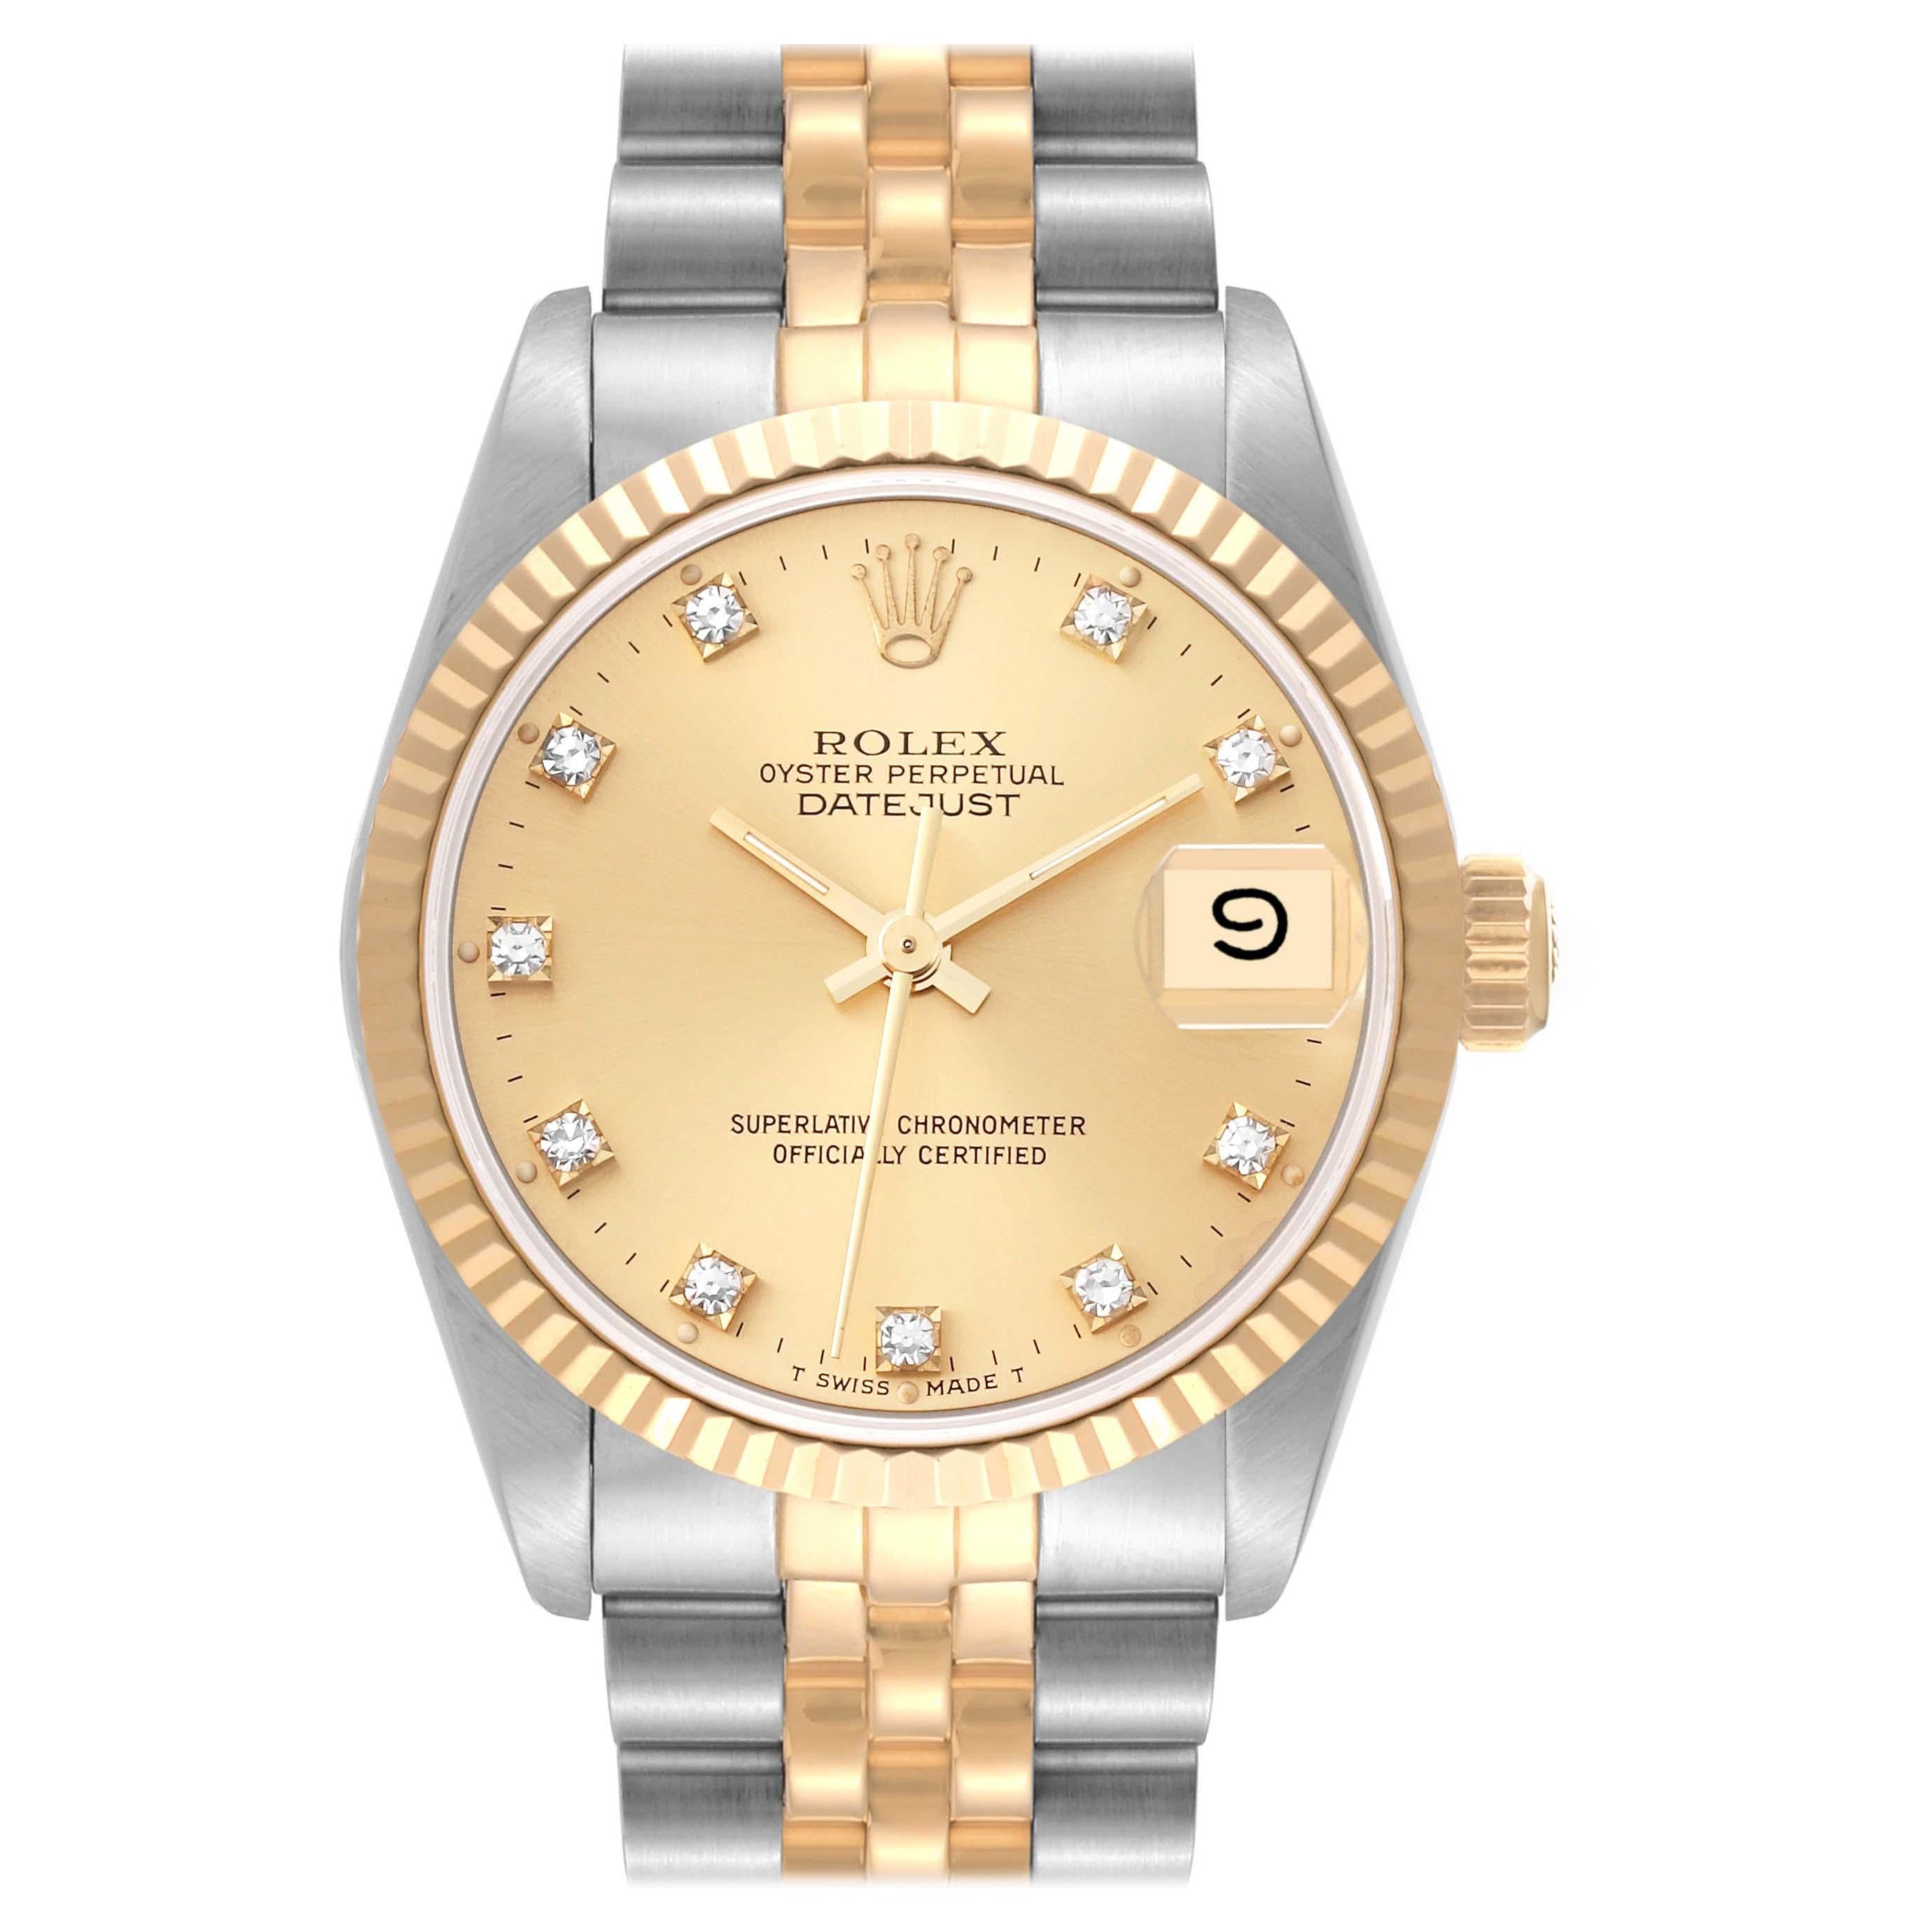 Rolex Datejust Midsize Diamond Dial Steel Yellow Gold Ladies Watch 68273